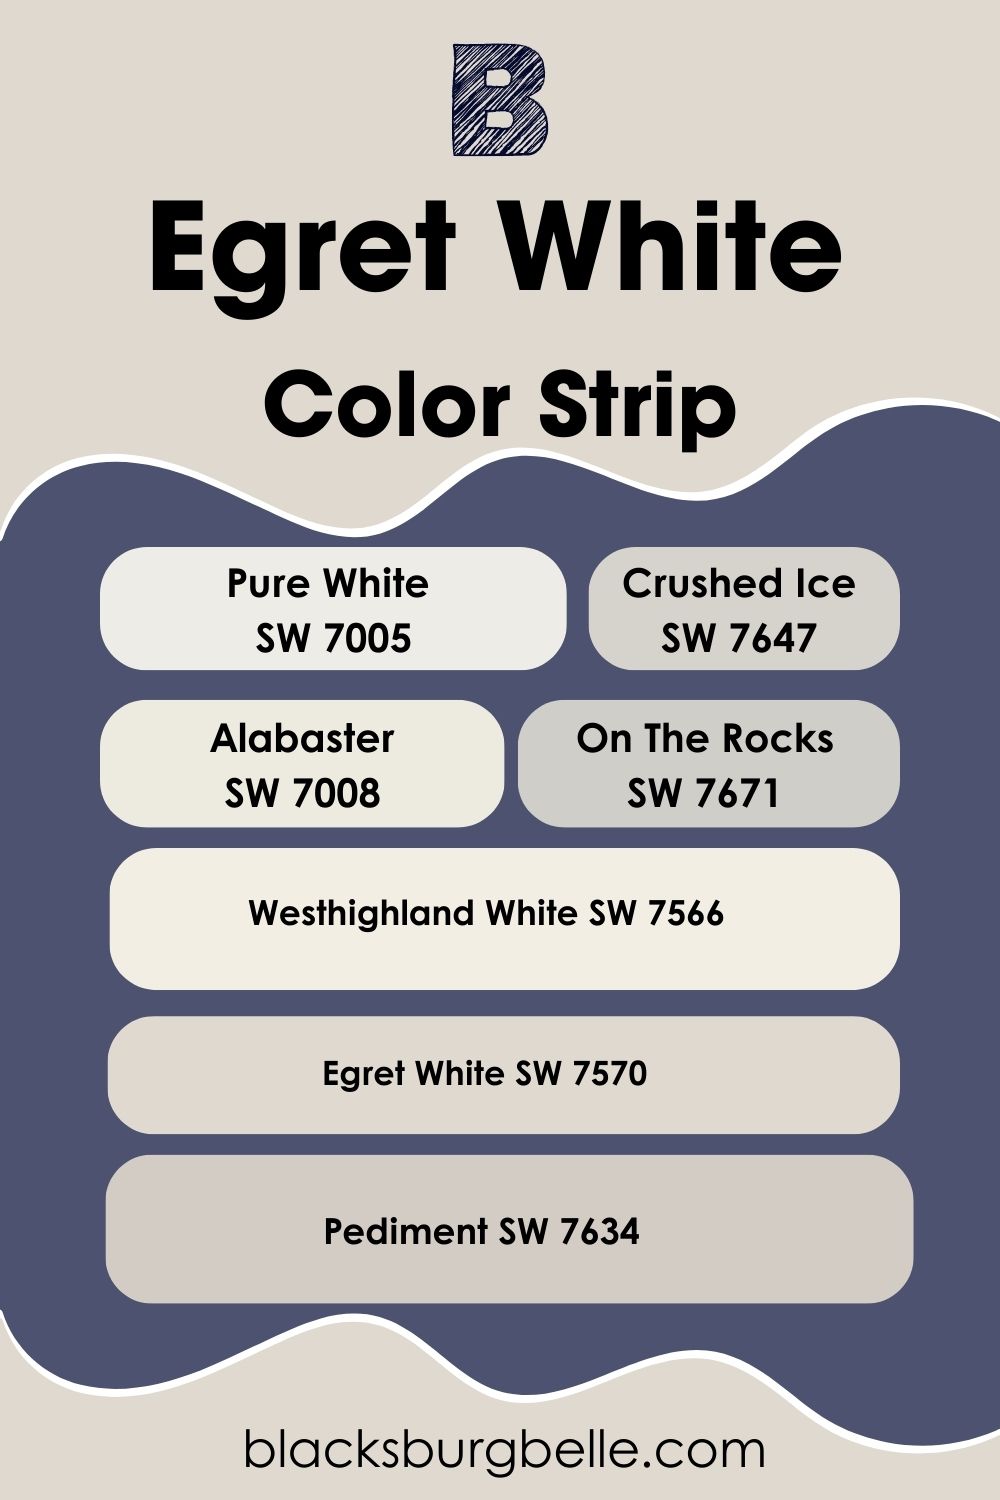 Egret White Color Strip